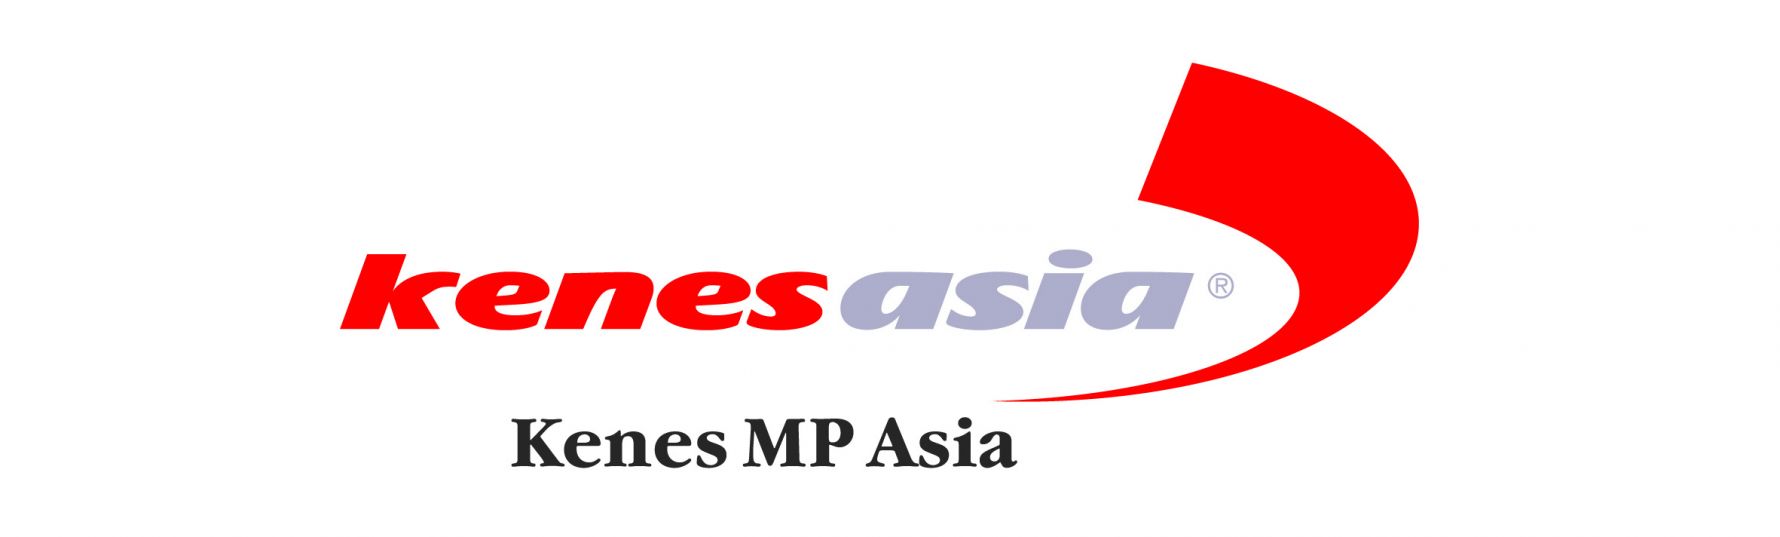 KenesAsia Logo